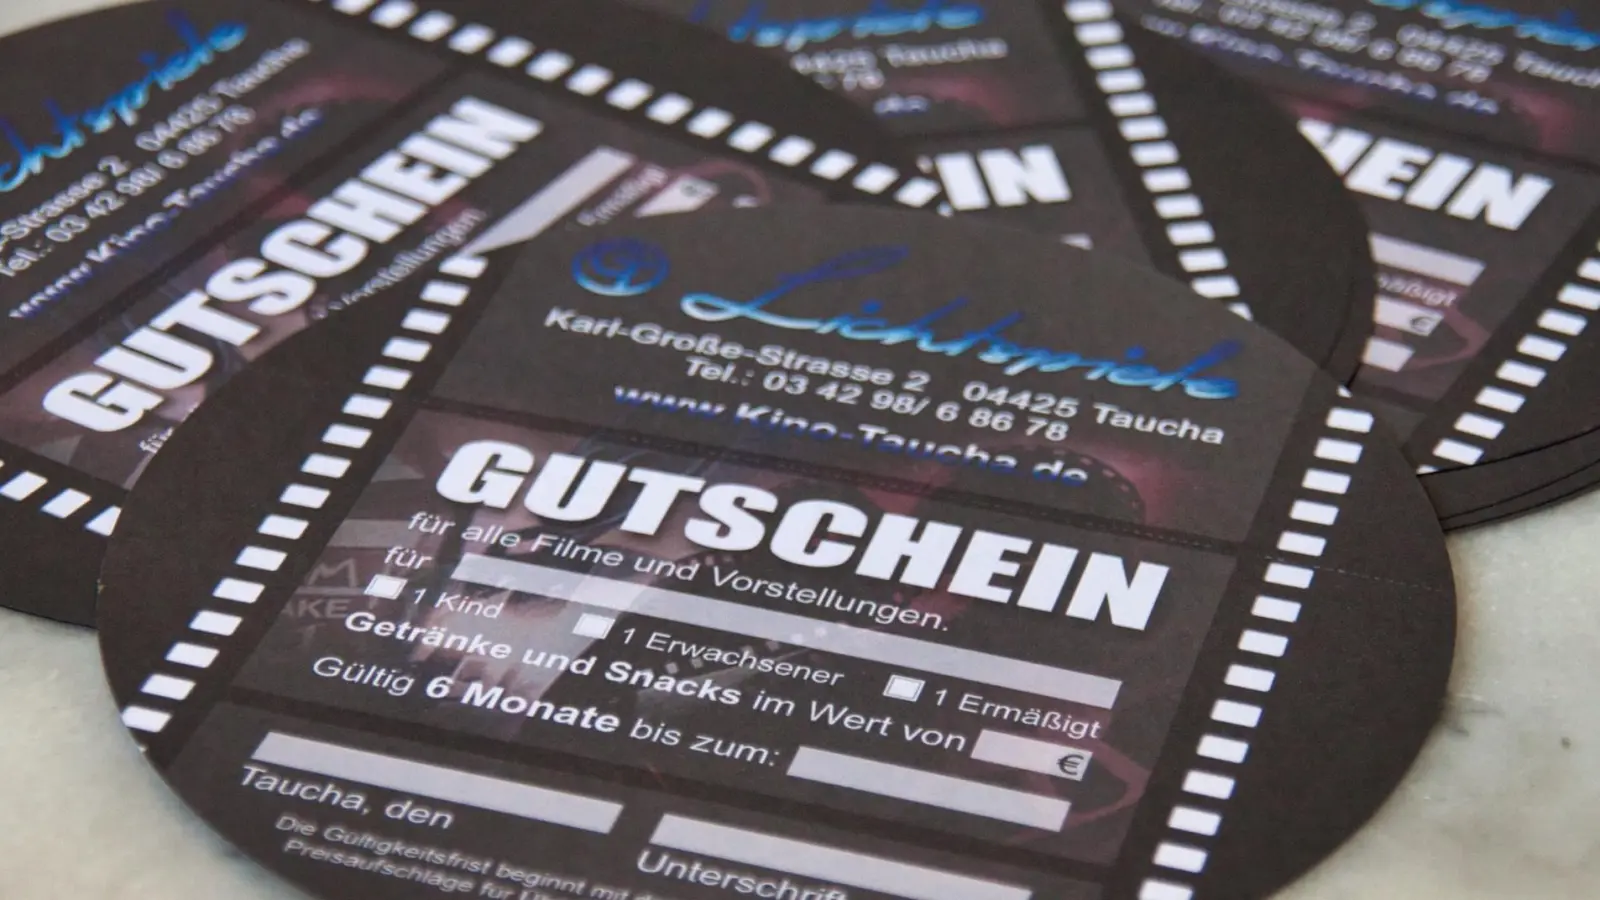 Sonderöffnung im Kino Taucha am 22. Dezember (Foto: taucha-kompakt.de)